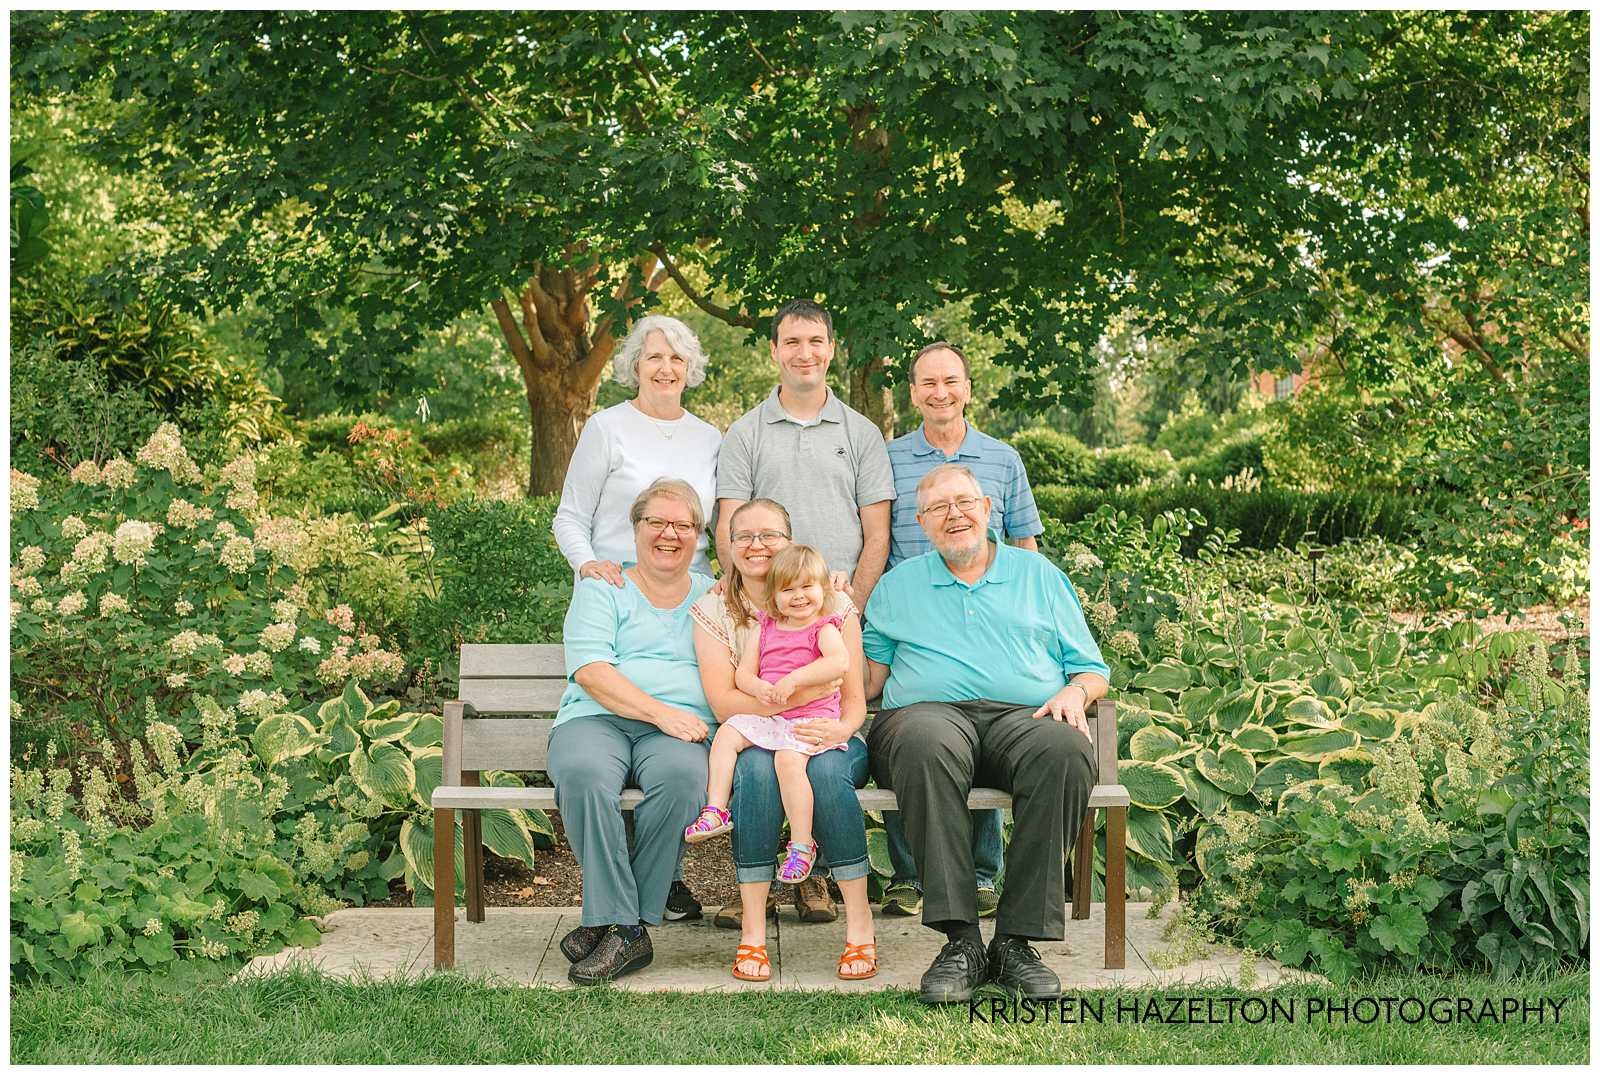 Extended family photos at Cantigny Park in Wheaton, Illinois